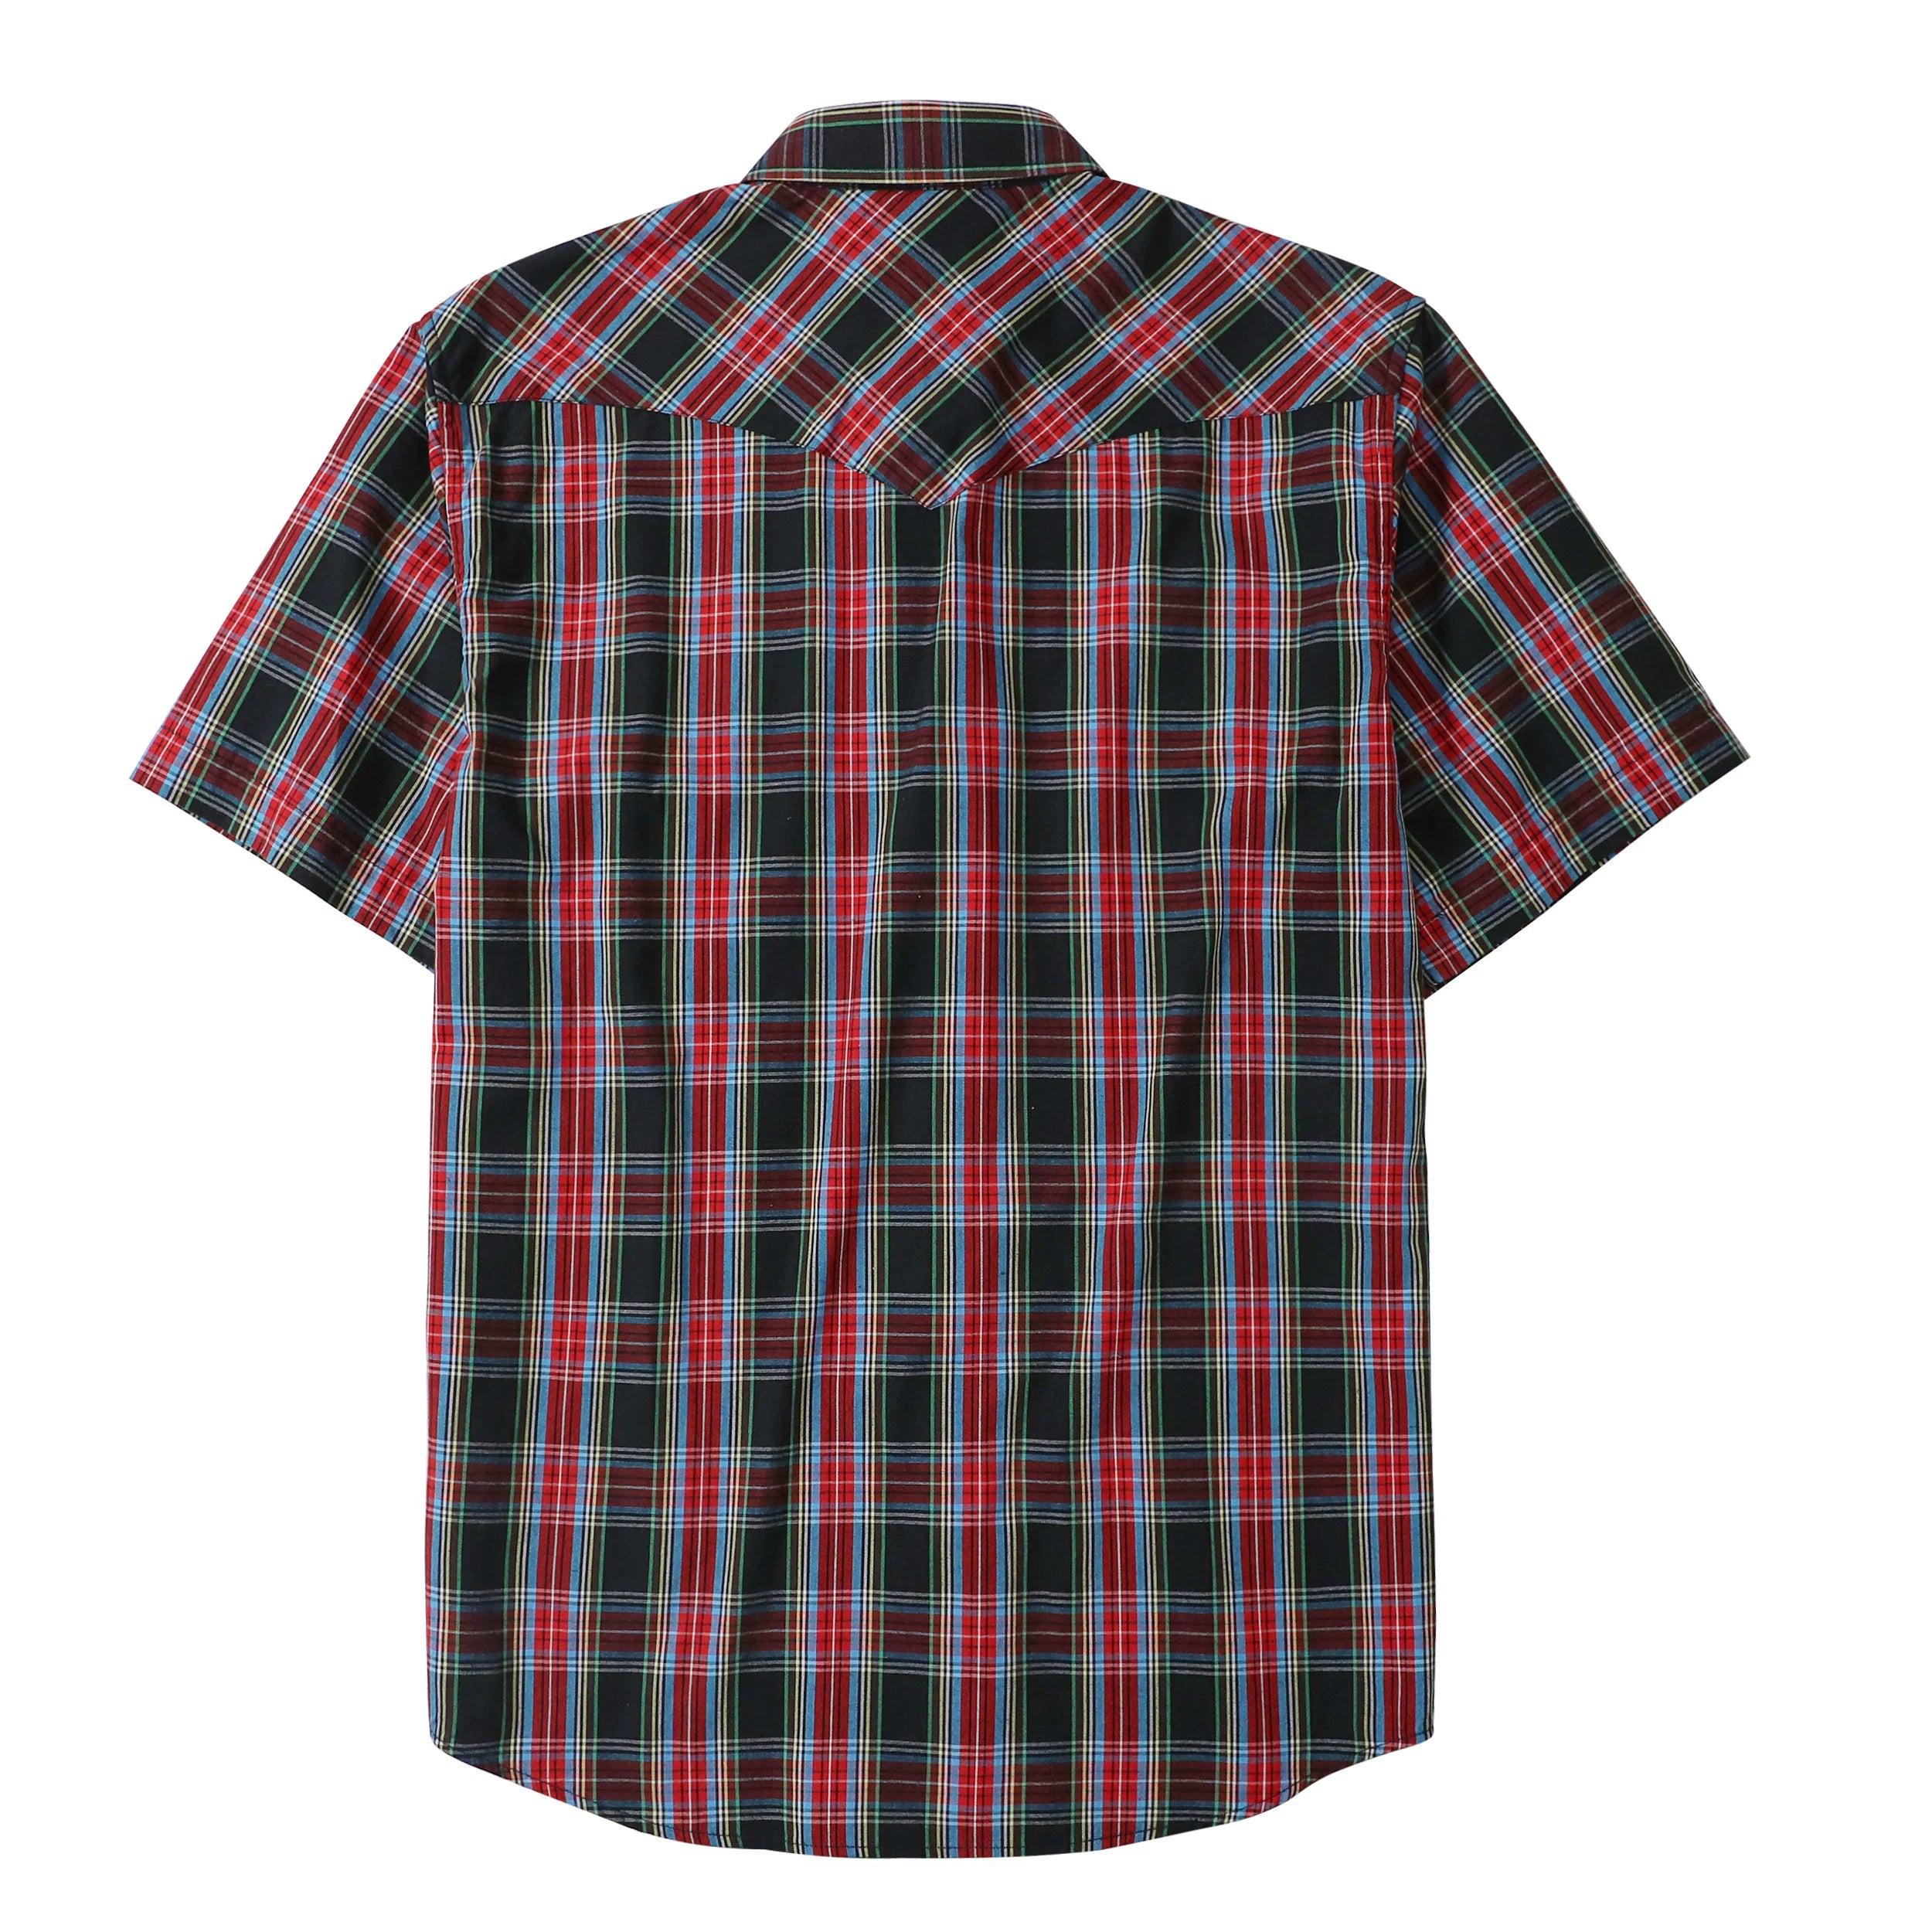 Dubinik® Western Shirts for Men Short Sleeve Plaid Pearl Snap Shirts for Men Button Up Shirt Cowboy Casual Work Shirt#41011